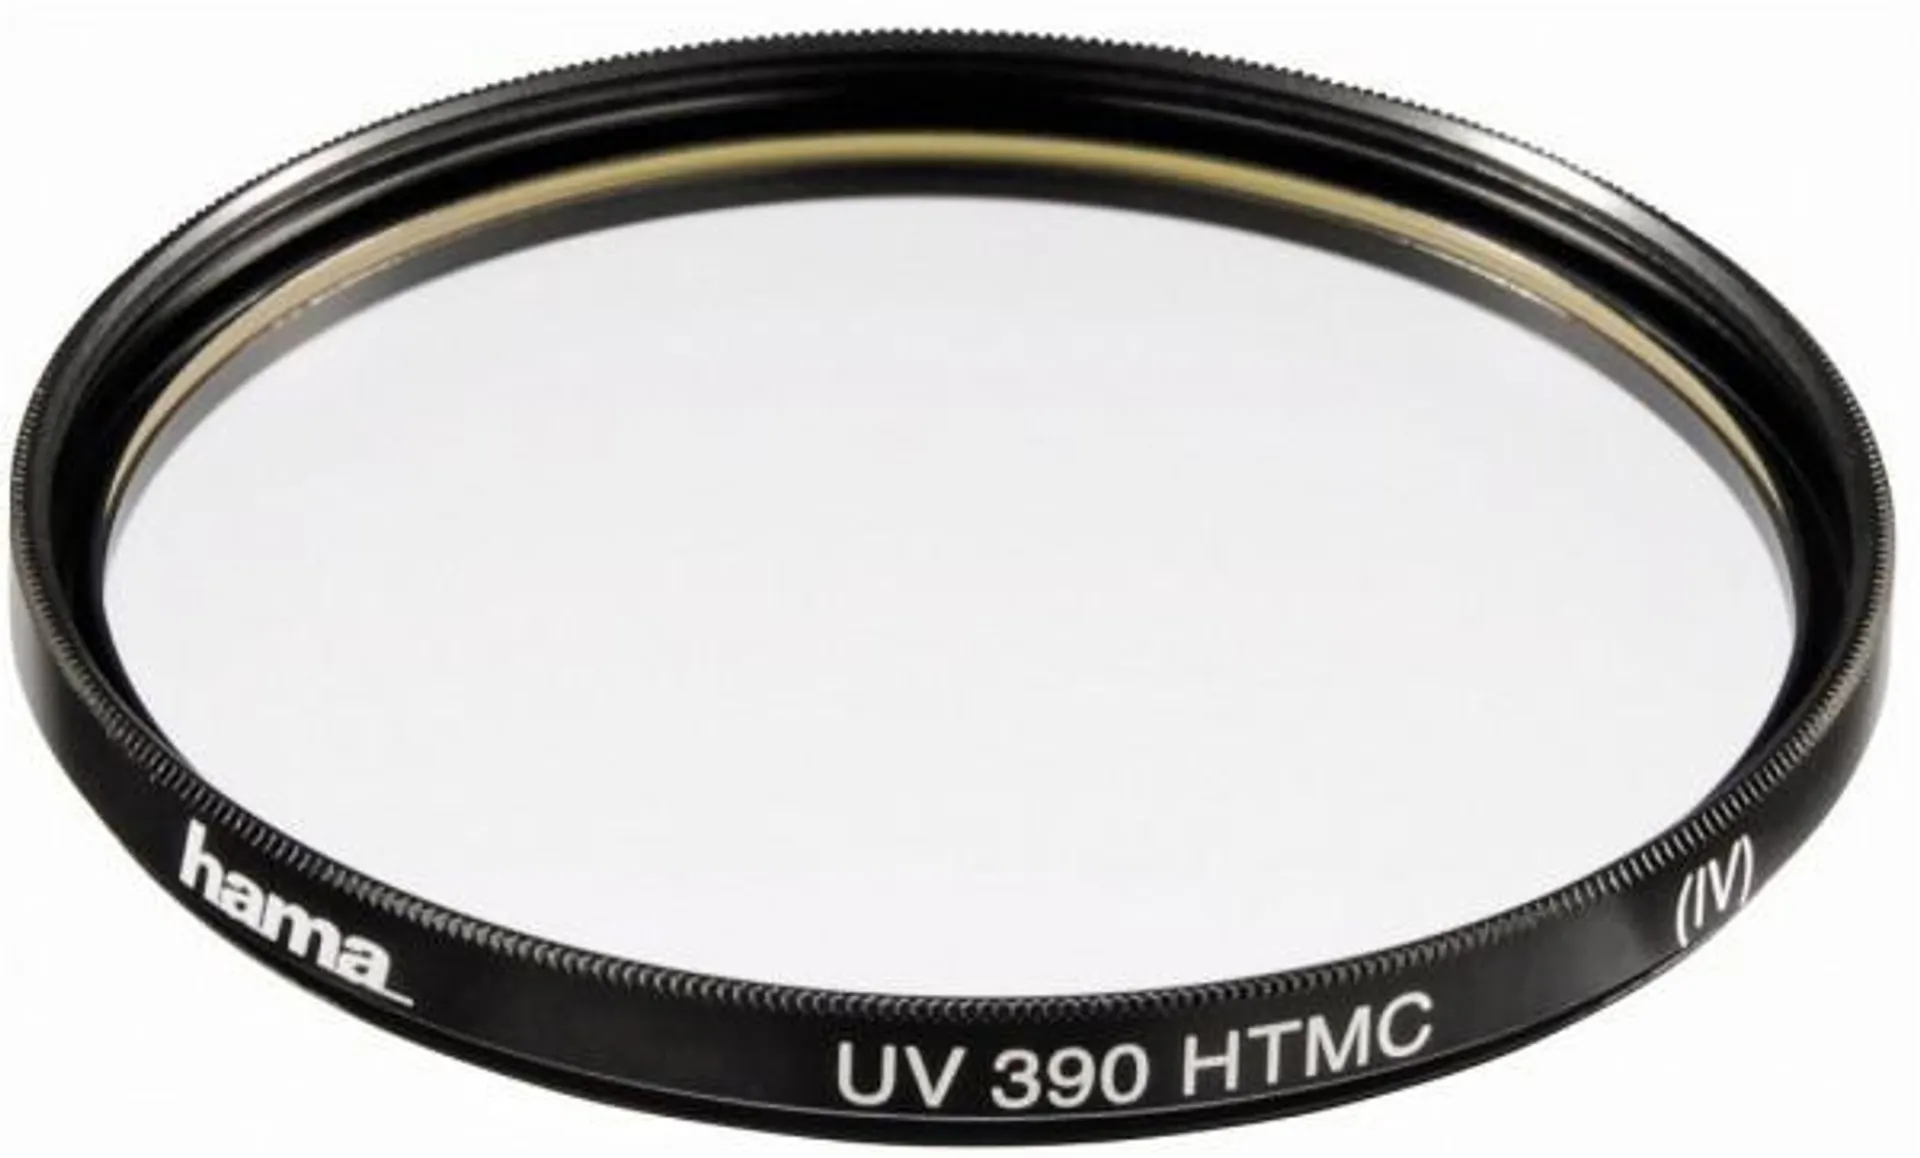 Hama UV 390, HTMC-vergütet, 55mm